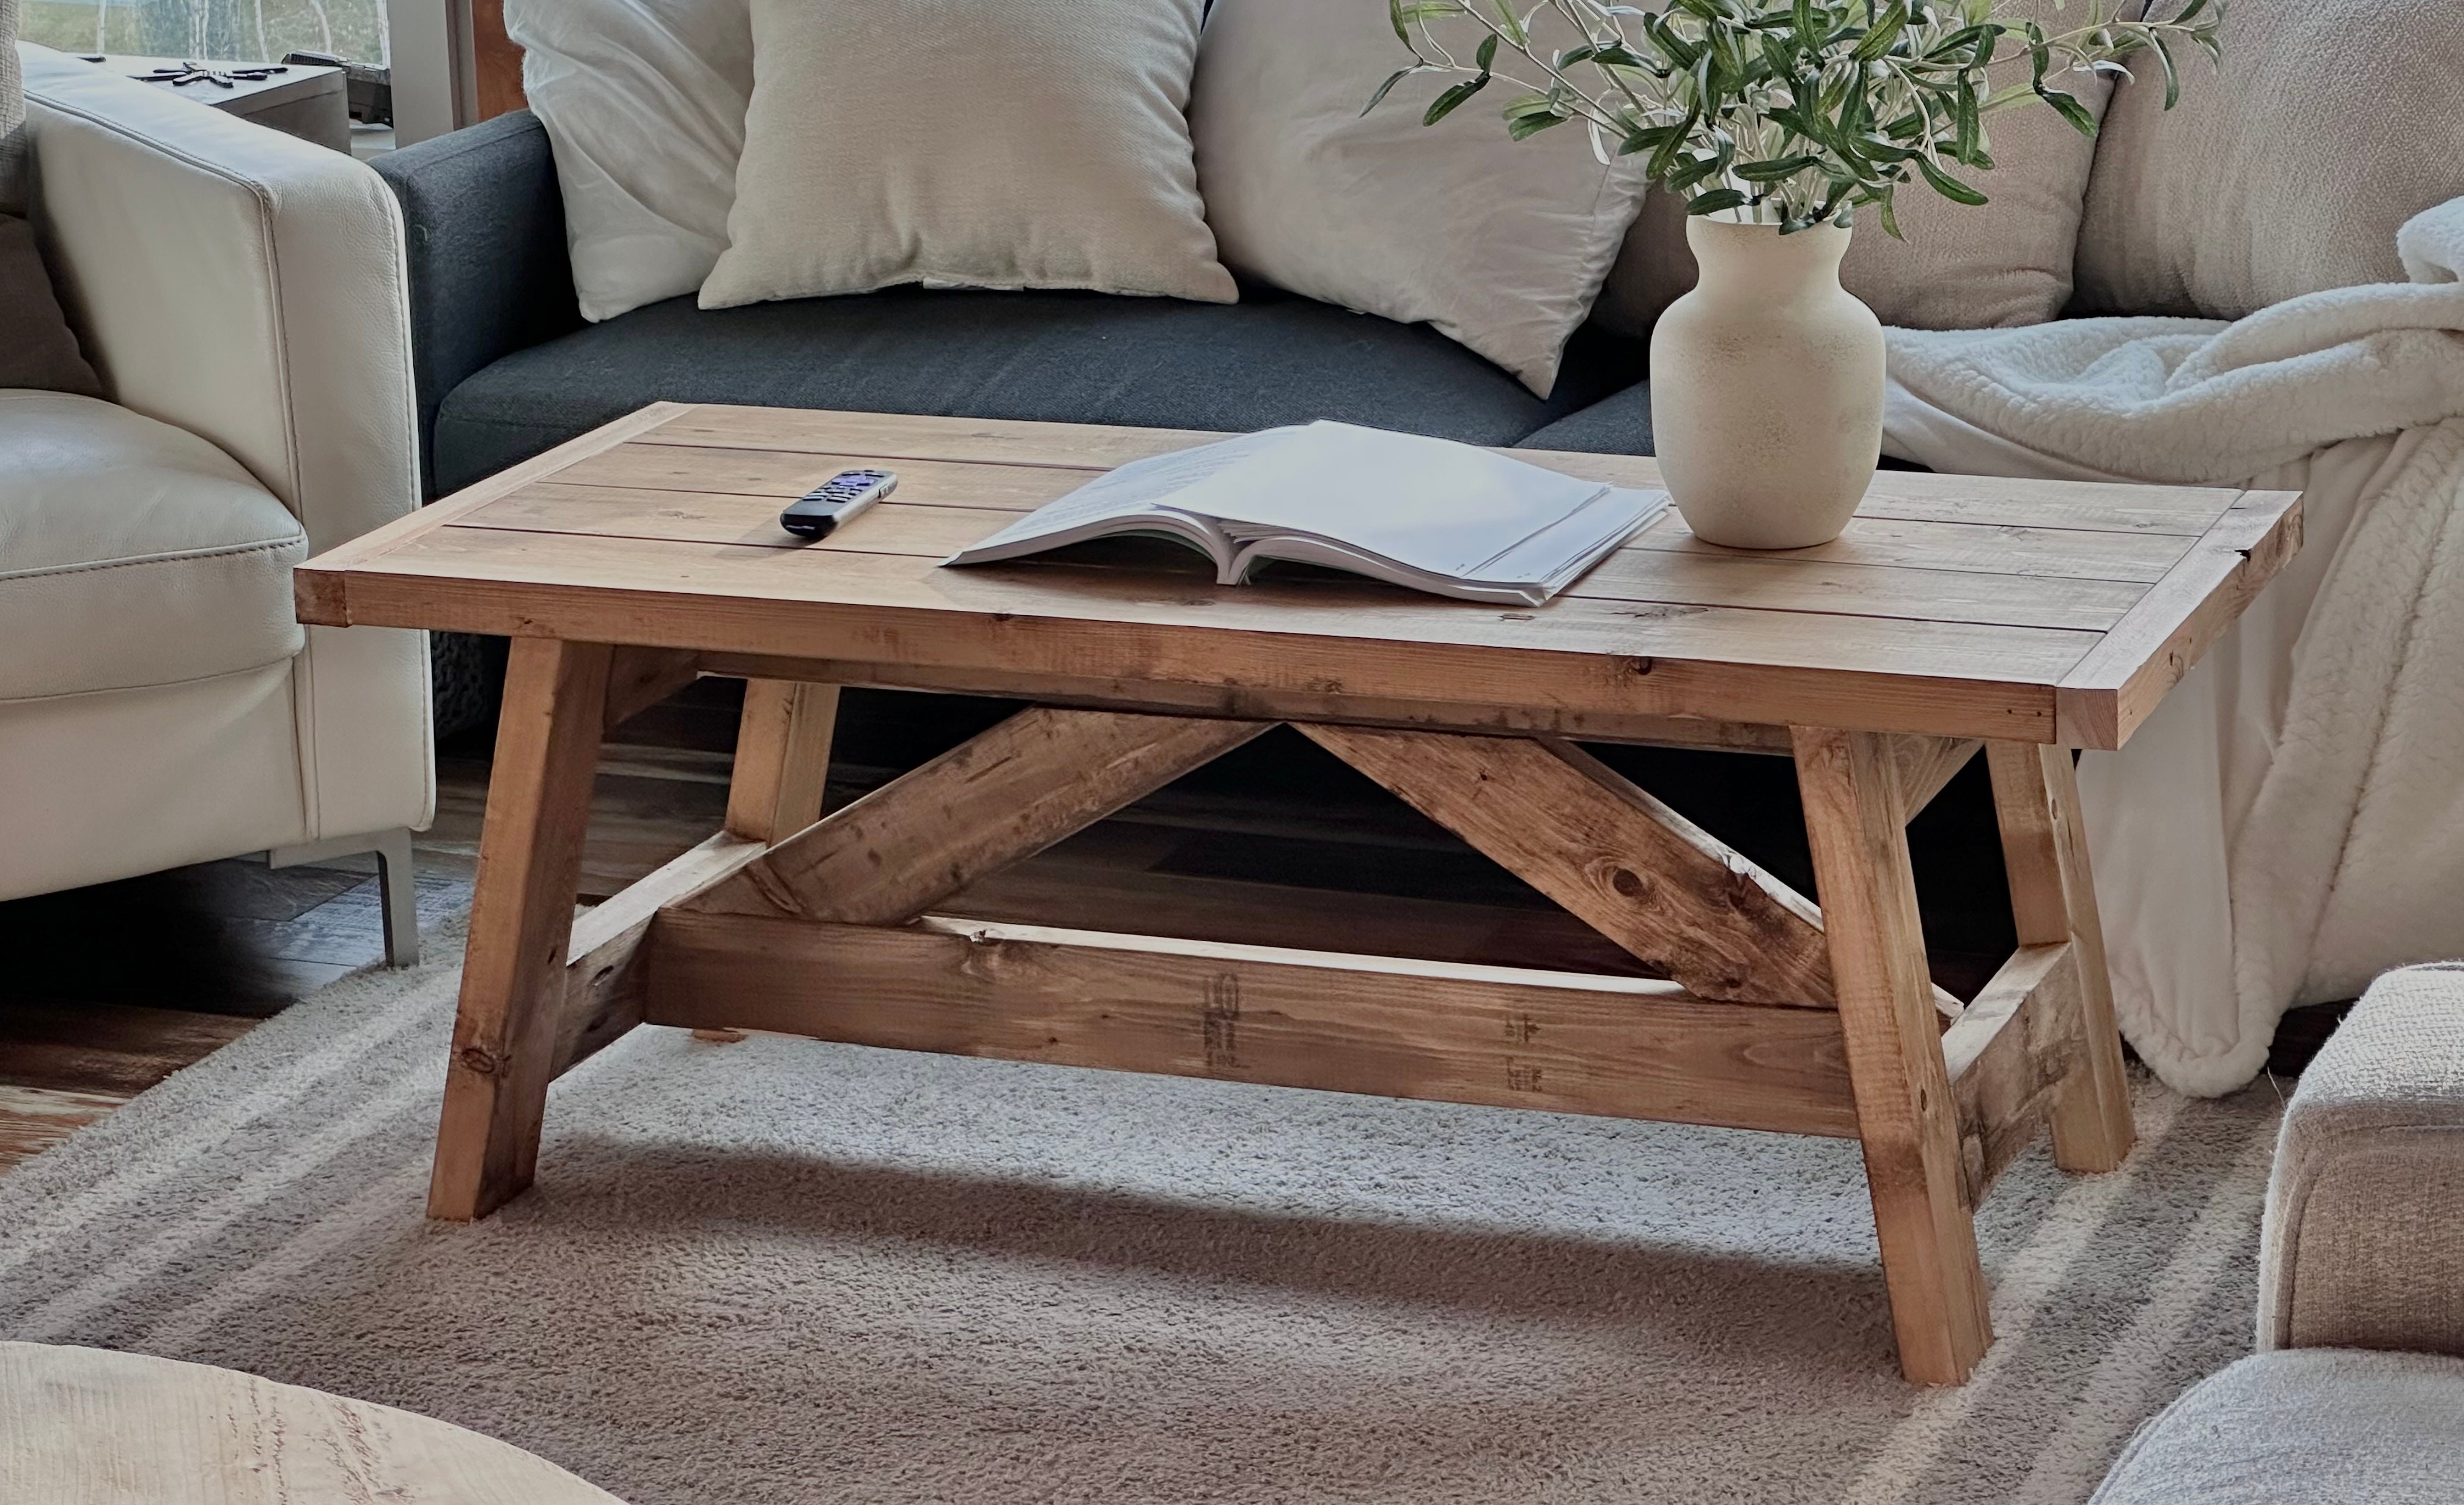 DIY truss coffee table plans